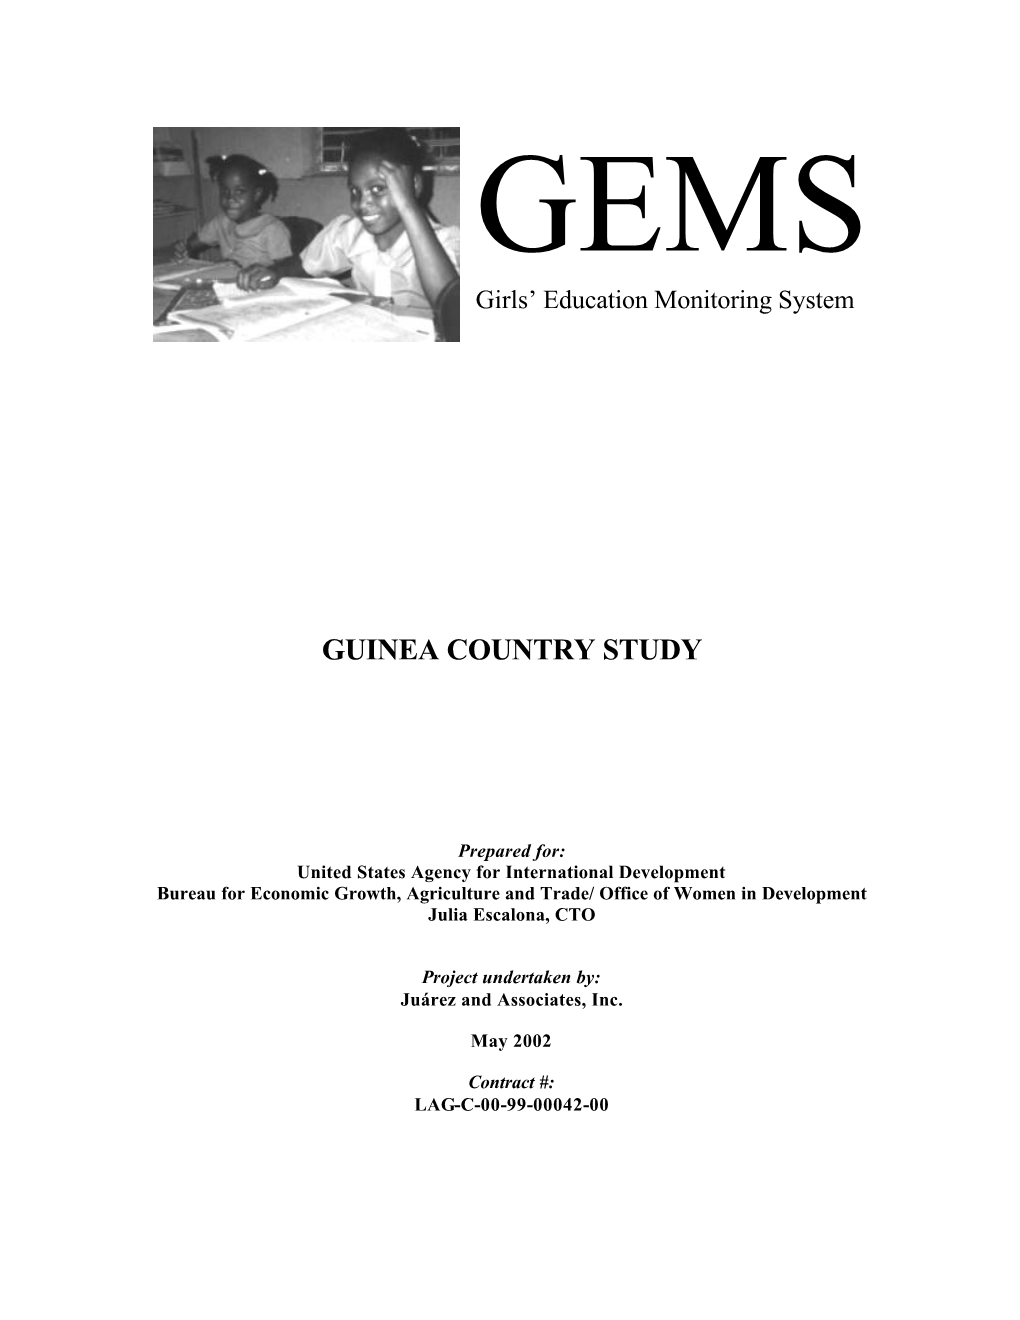 Guinea Country Study